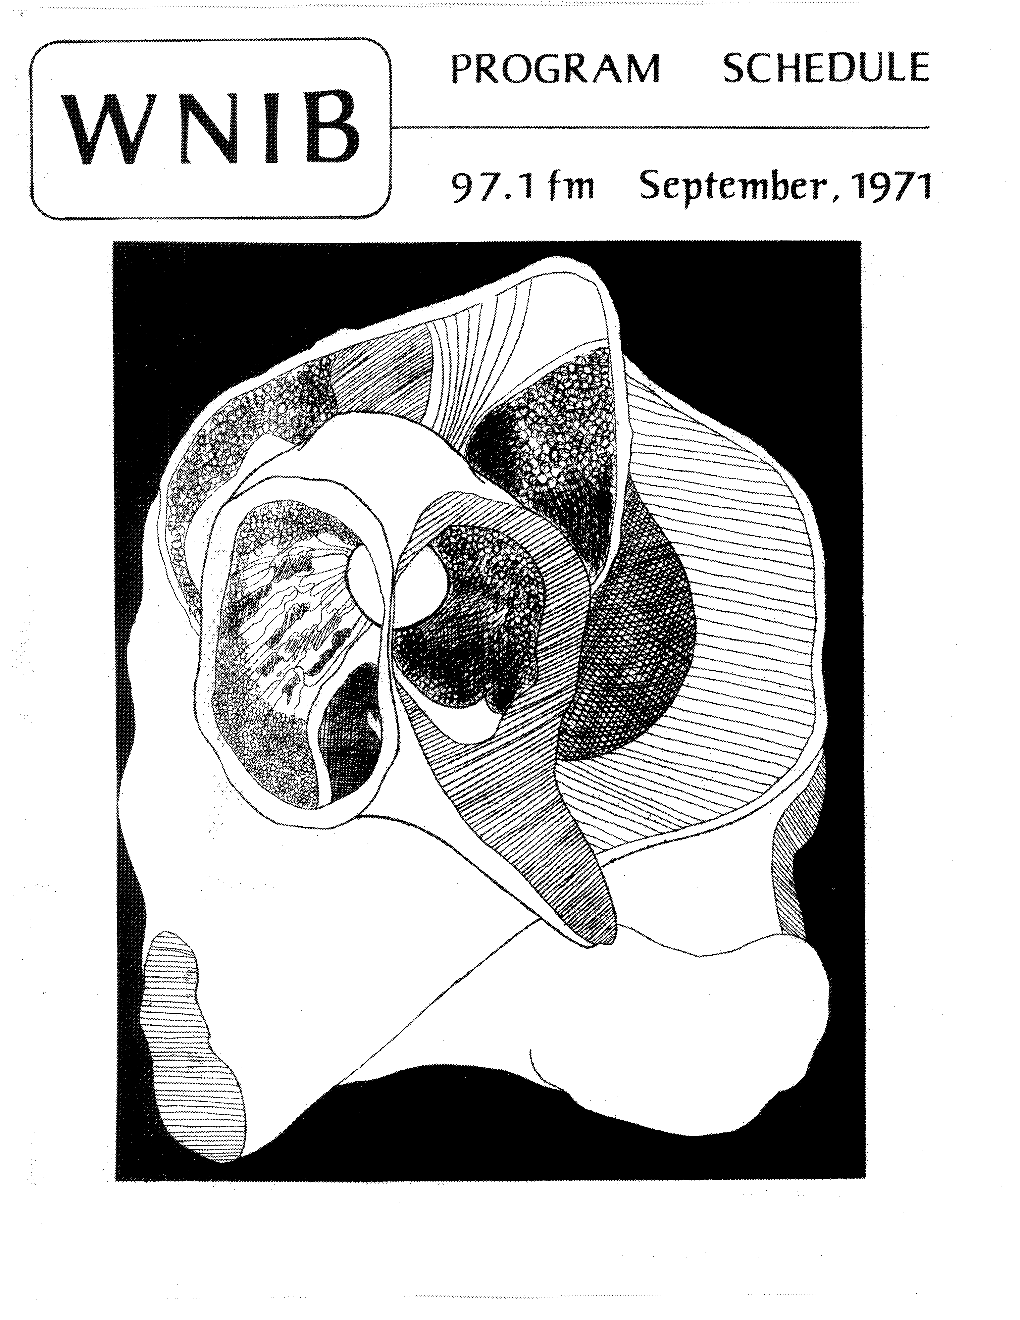 WNIB Program Schedule September 1971